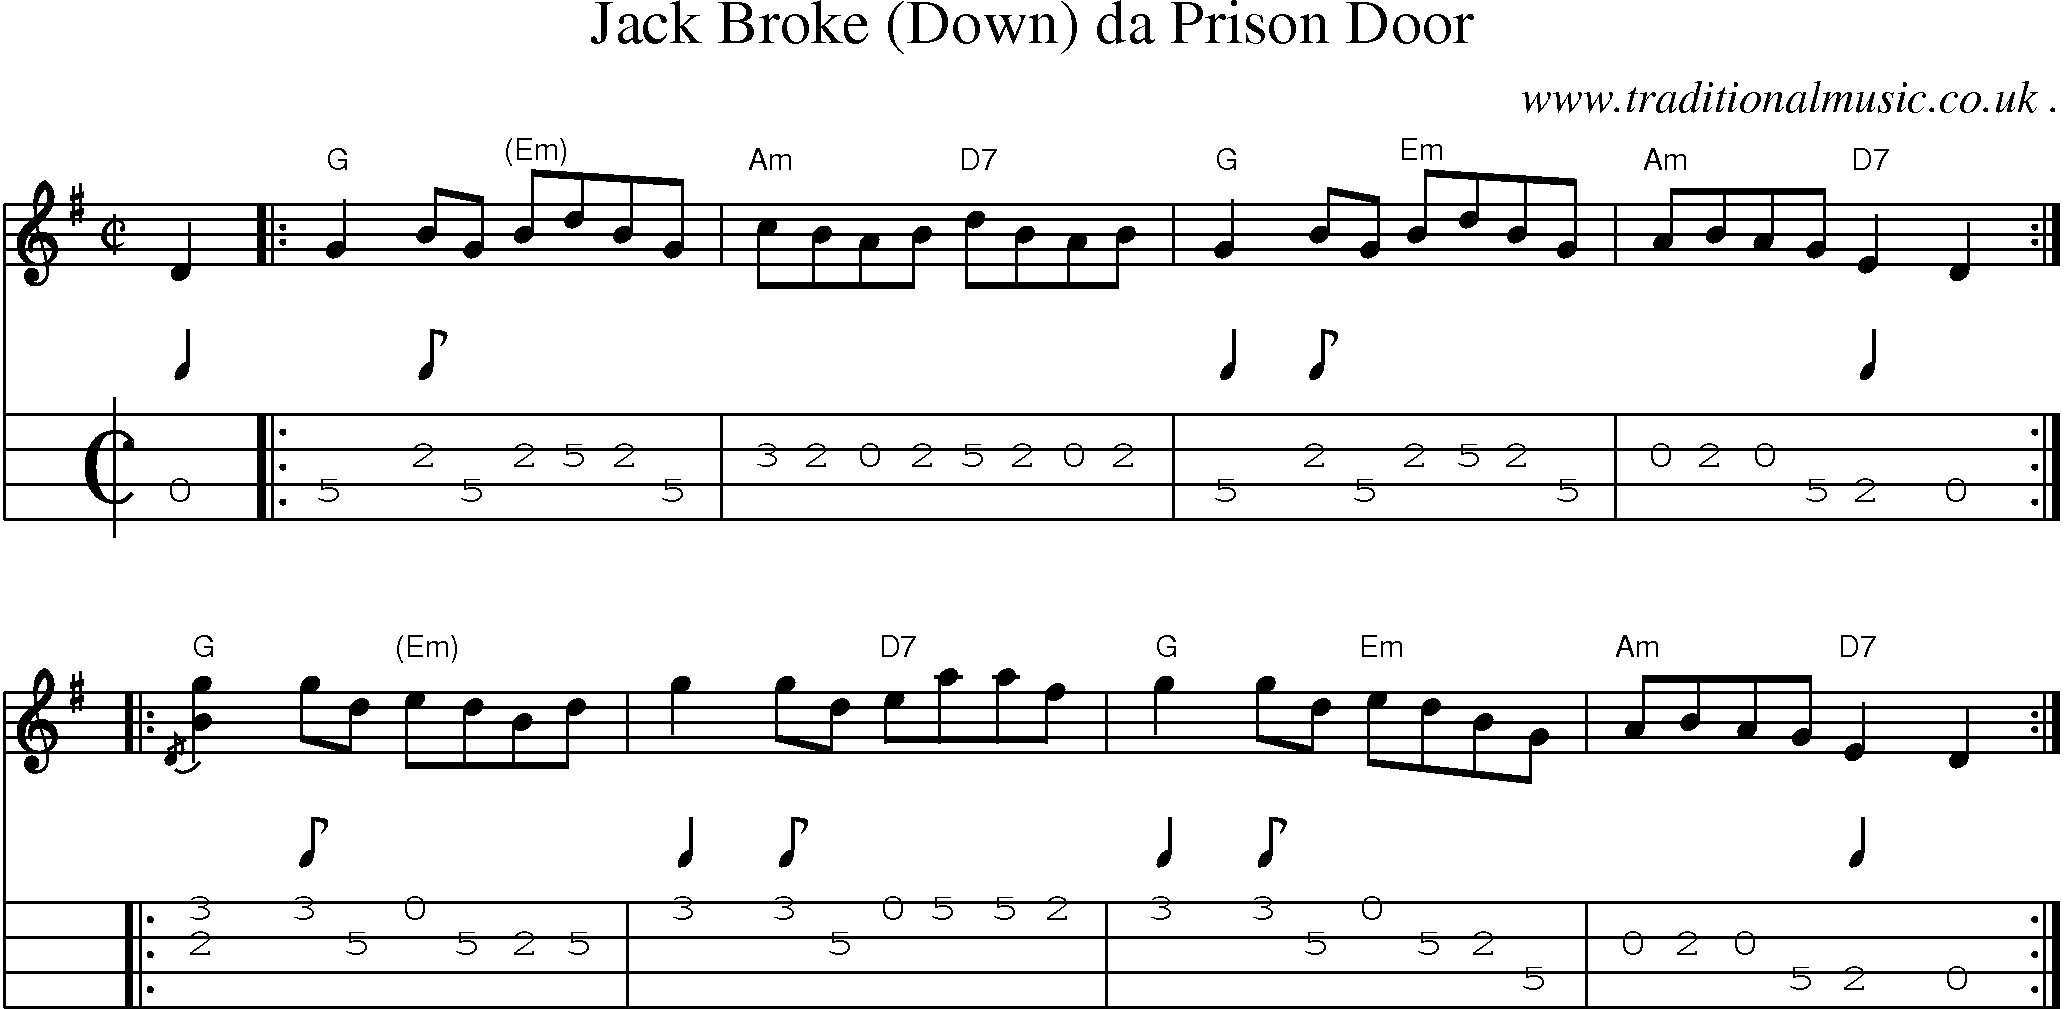 Sheet-music  score, Chords and Mandolin Tabs for Jack Broke Down Da Prison Door